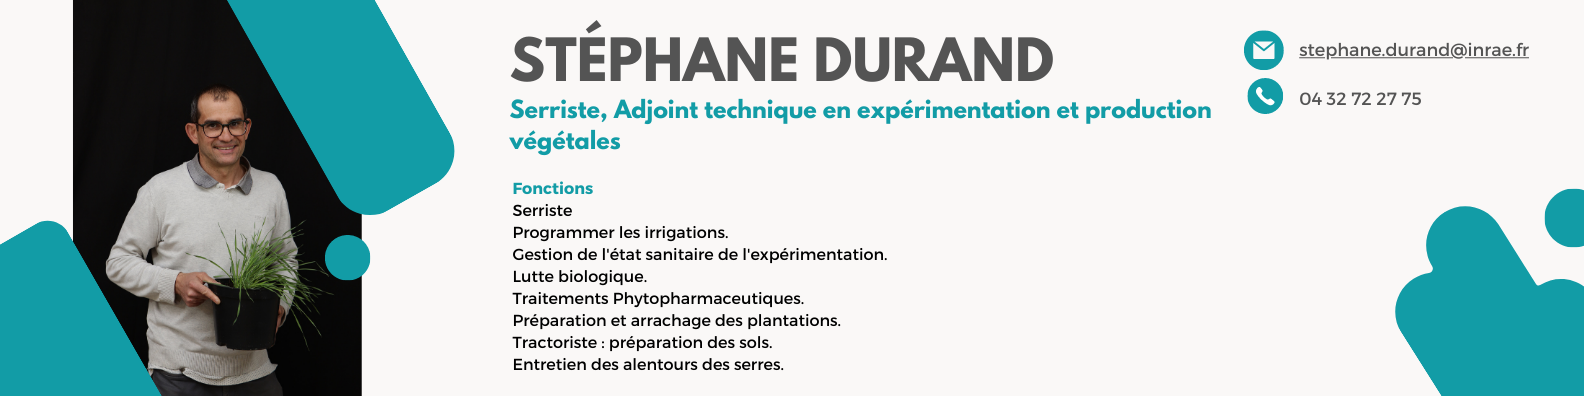 Stéphane Durand 1.png